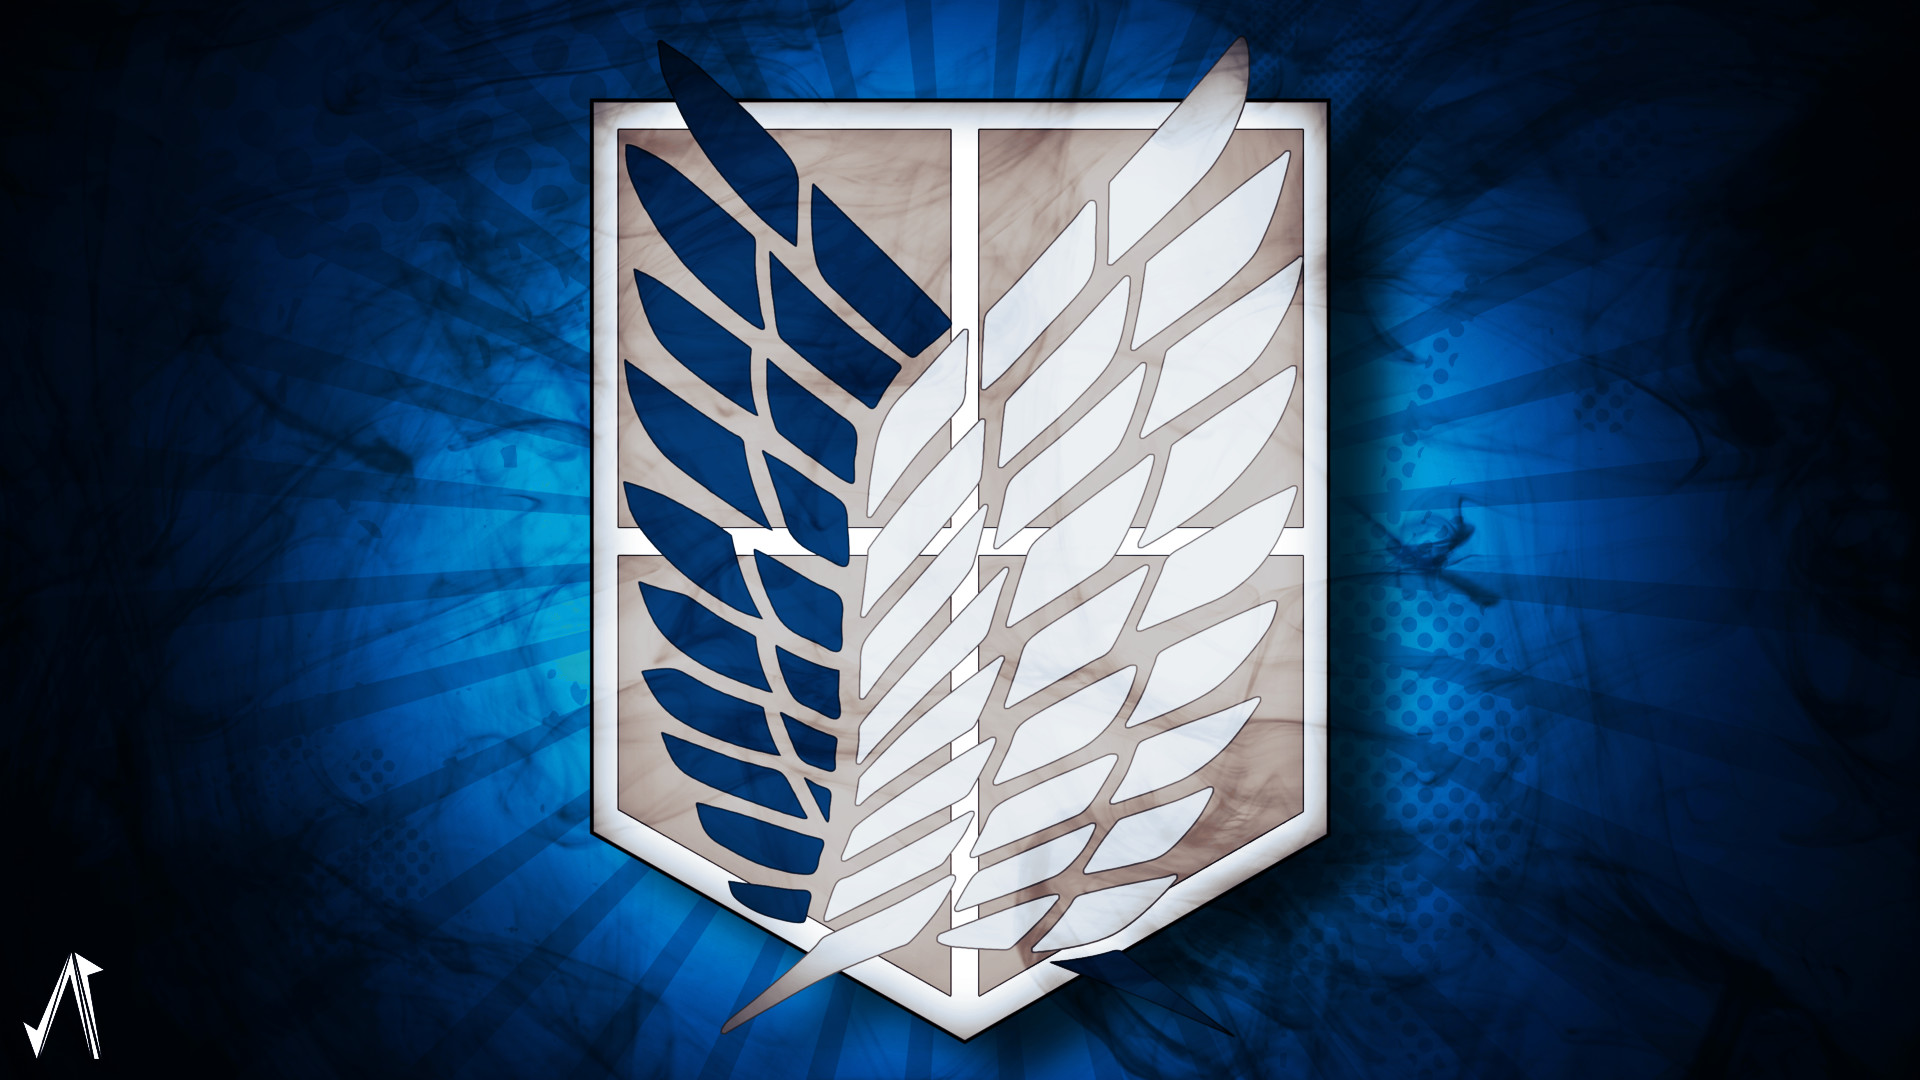 1920x1080 Wings of Freedom Wallpapers - WallpaperSafari Attack On Titan Wallpaper Hd Scouting  Legion